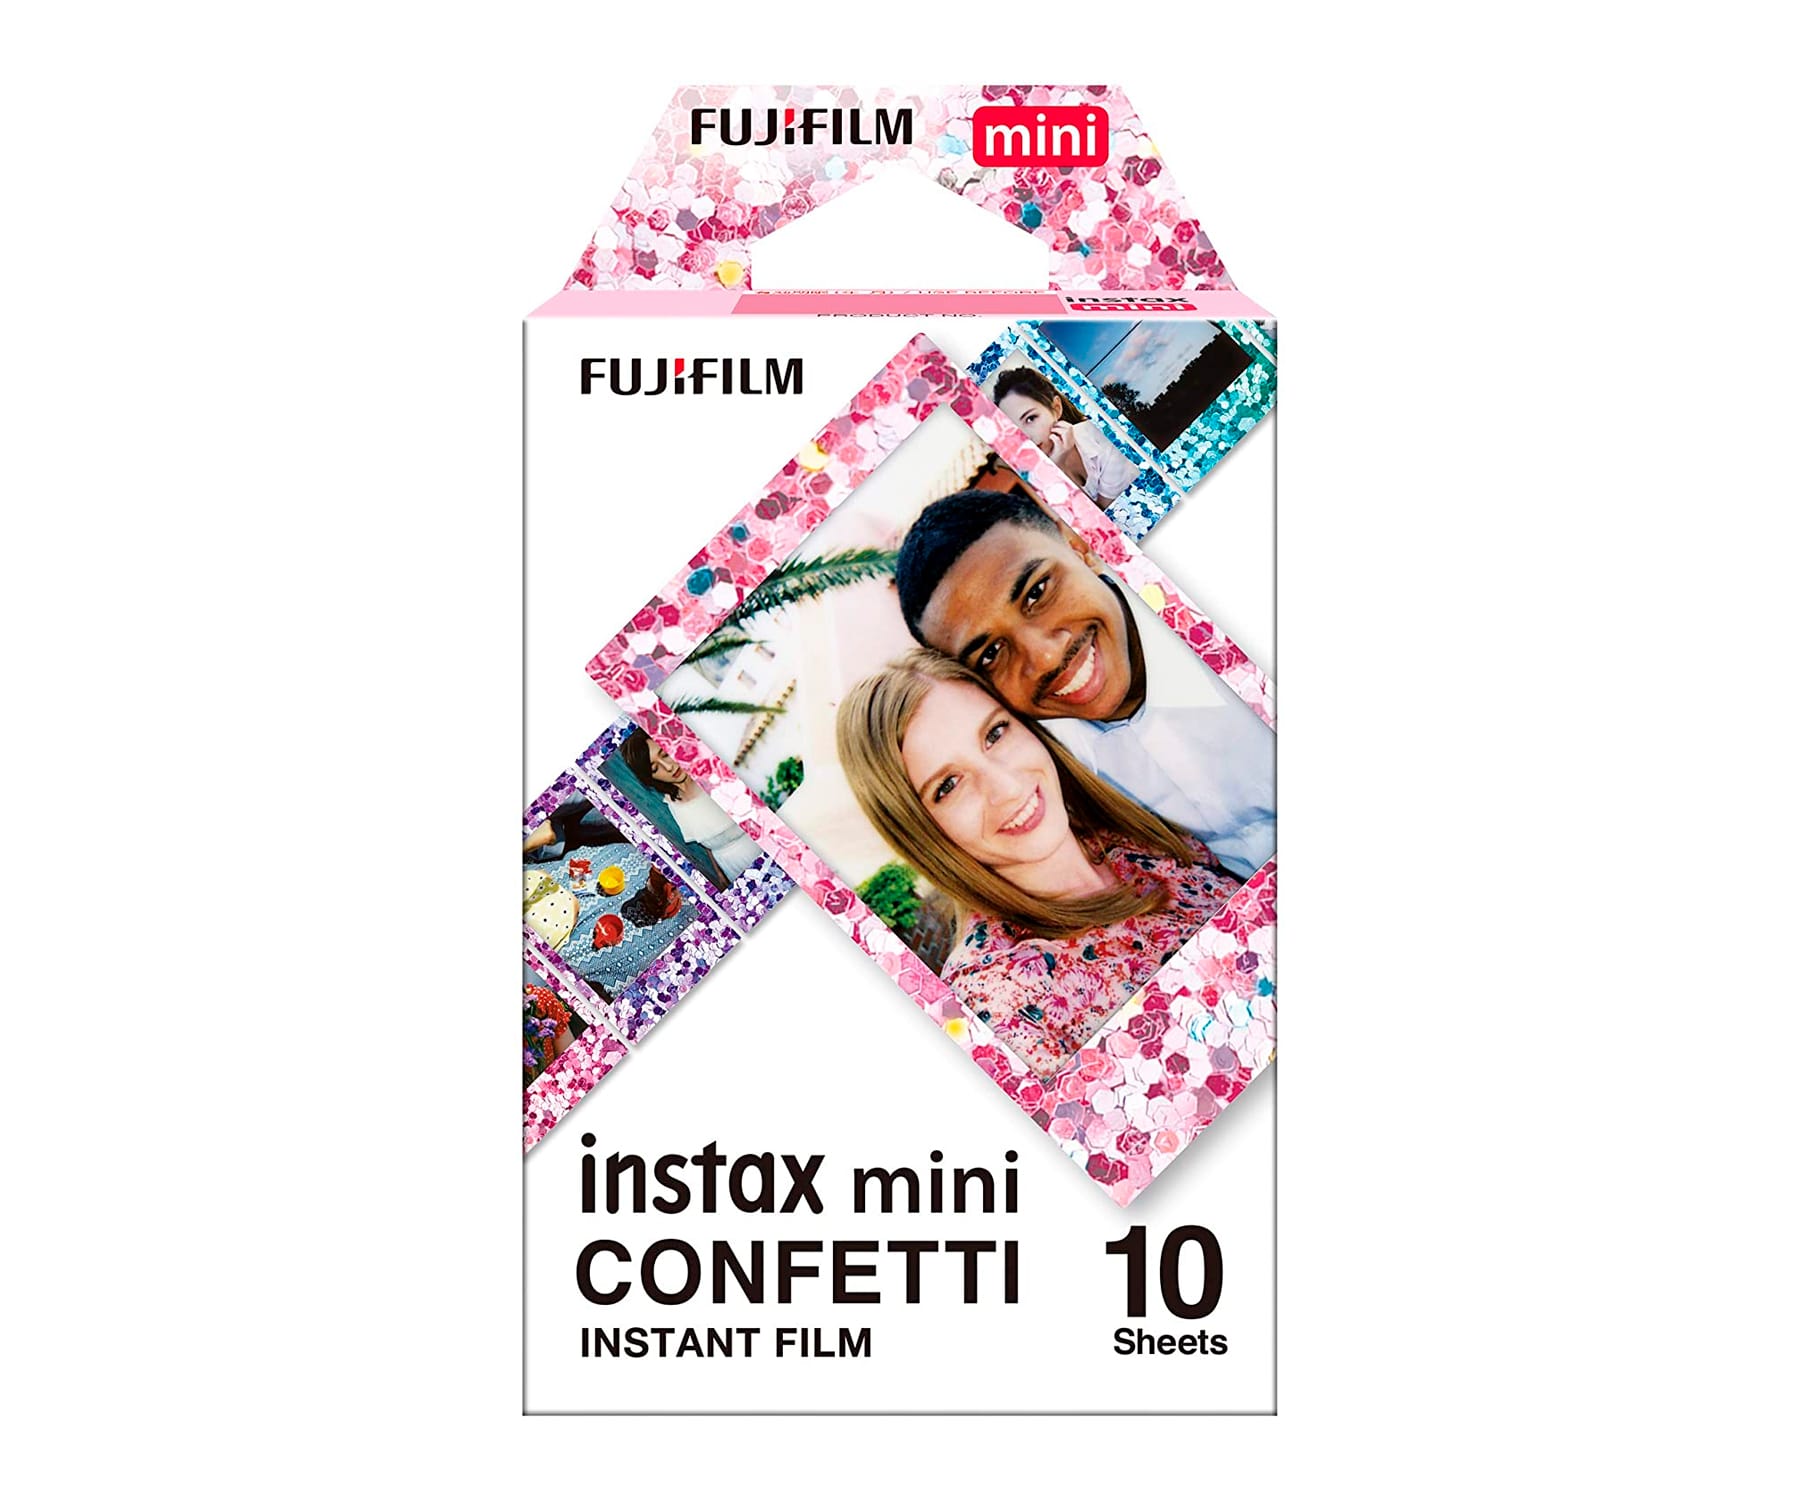 FUJIFILM instant film shot Confetti / Película fotográfica instantánea